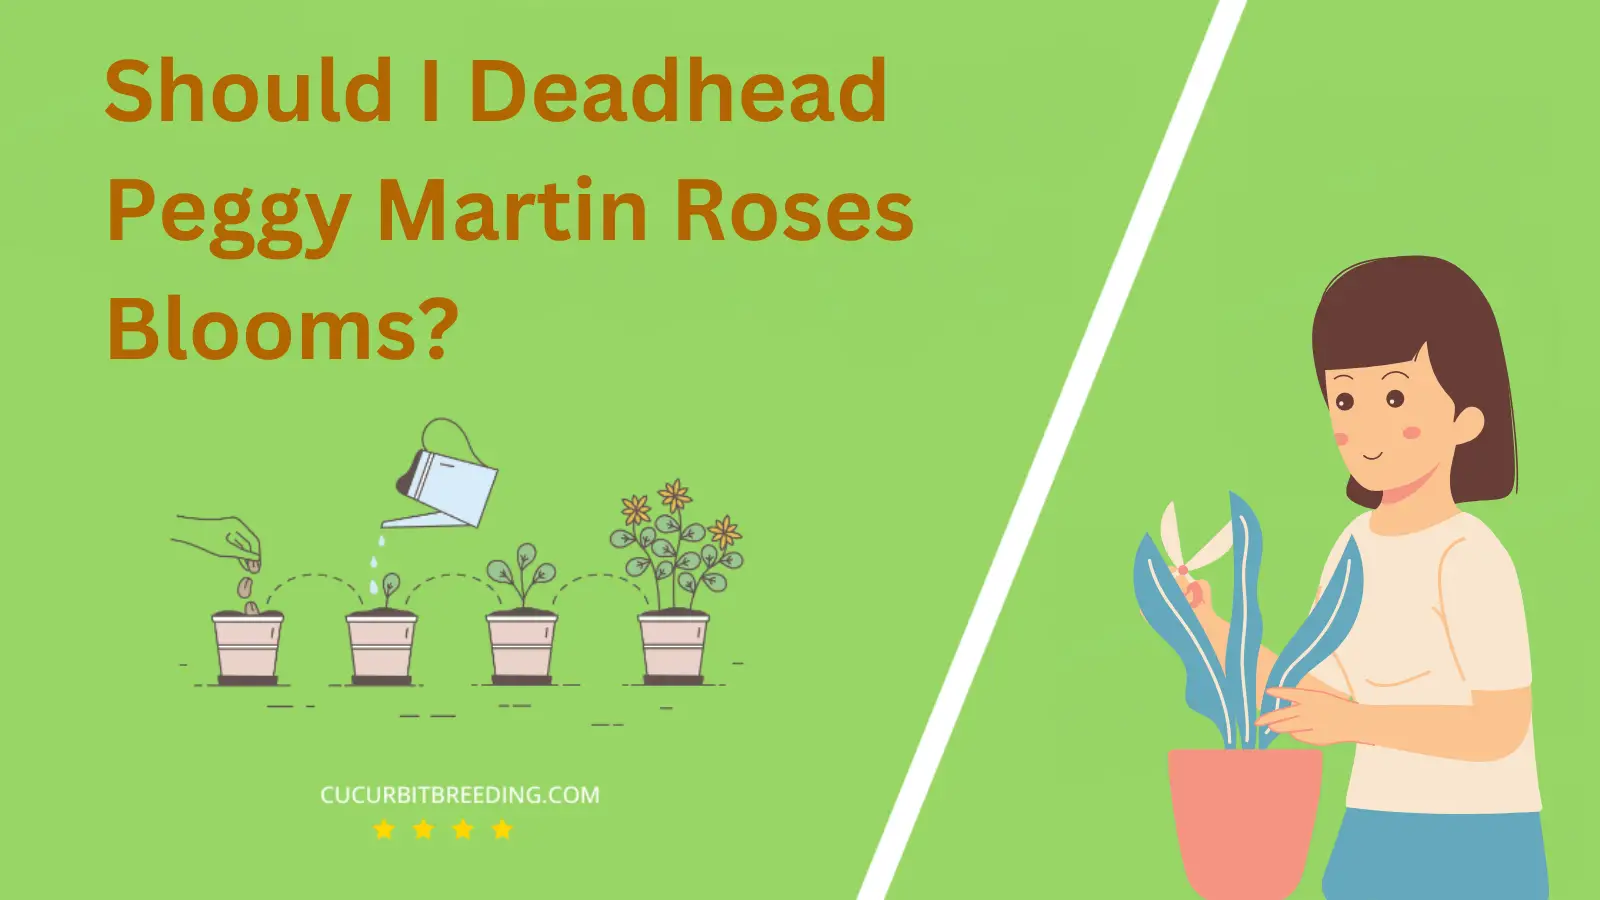 Should I Deadhead Peggy Martin Roses Blooms?